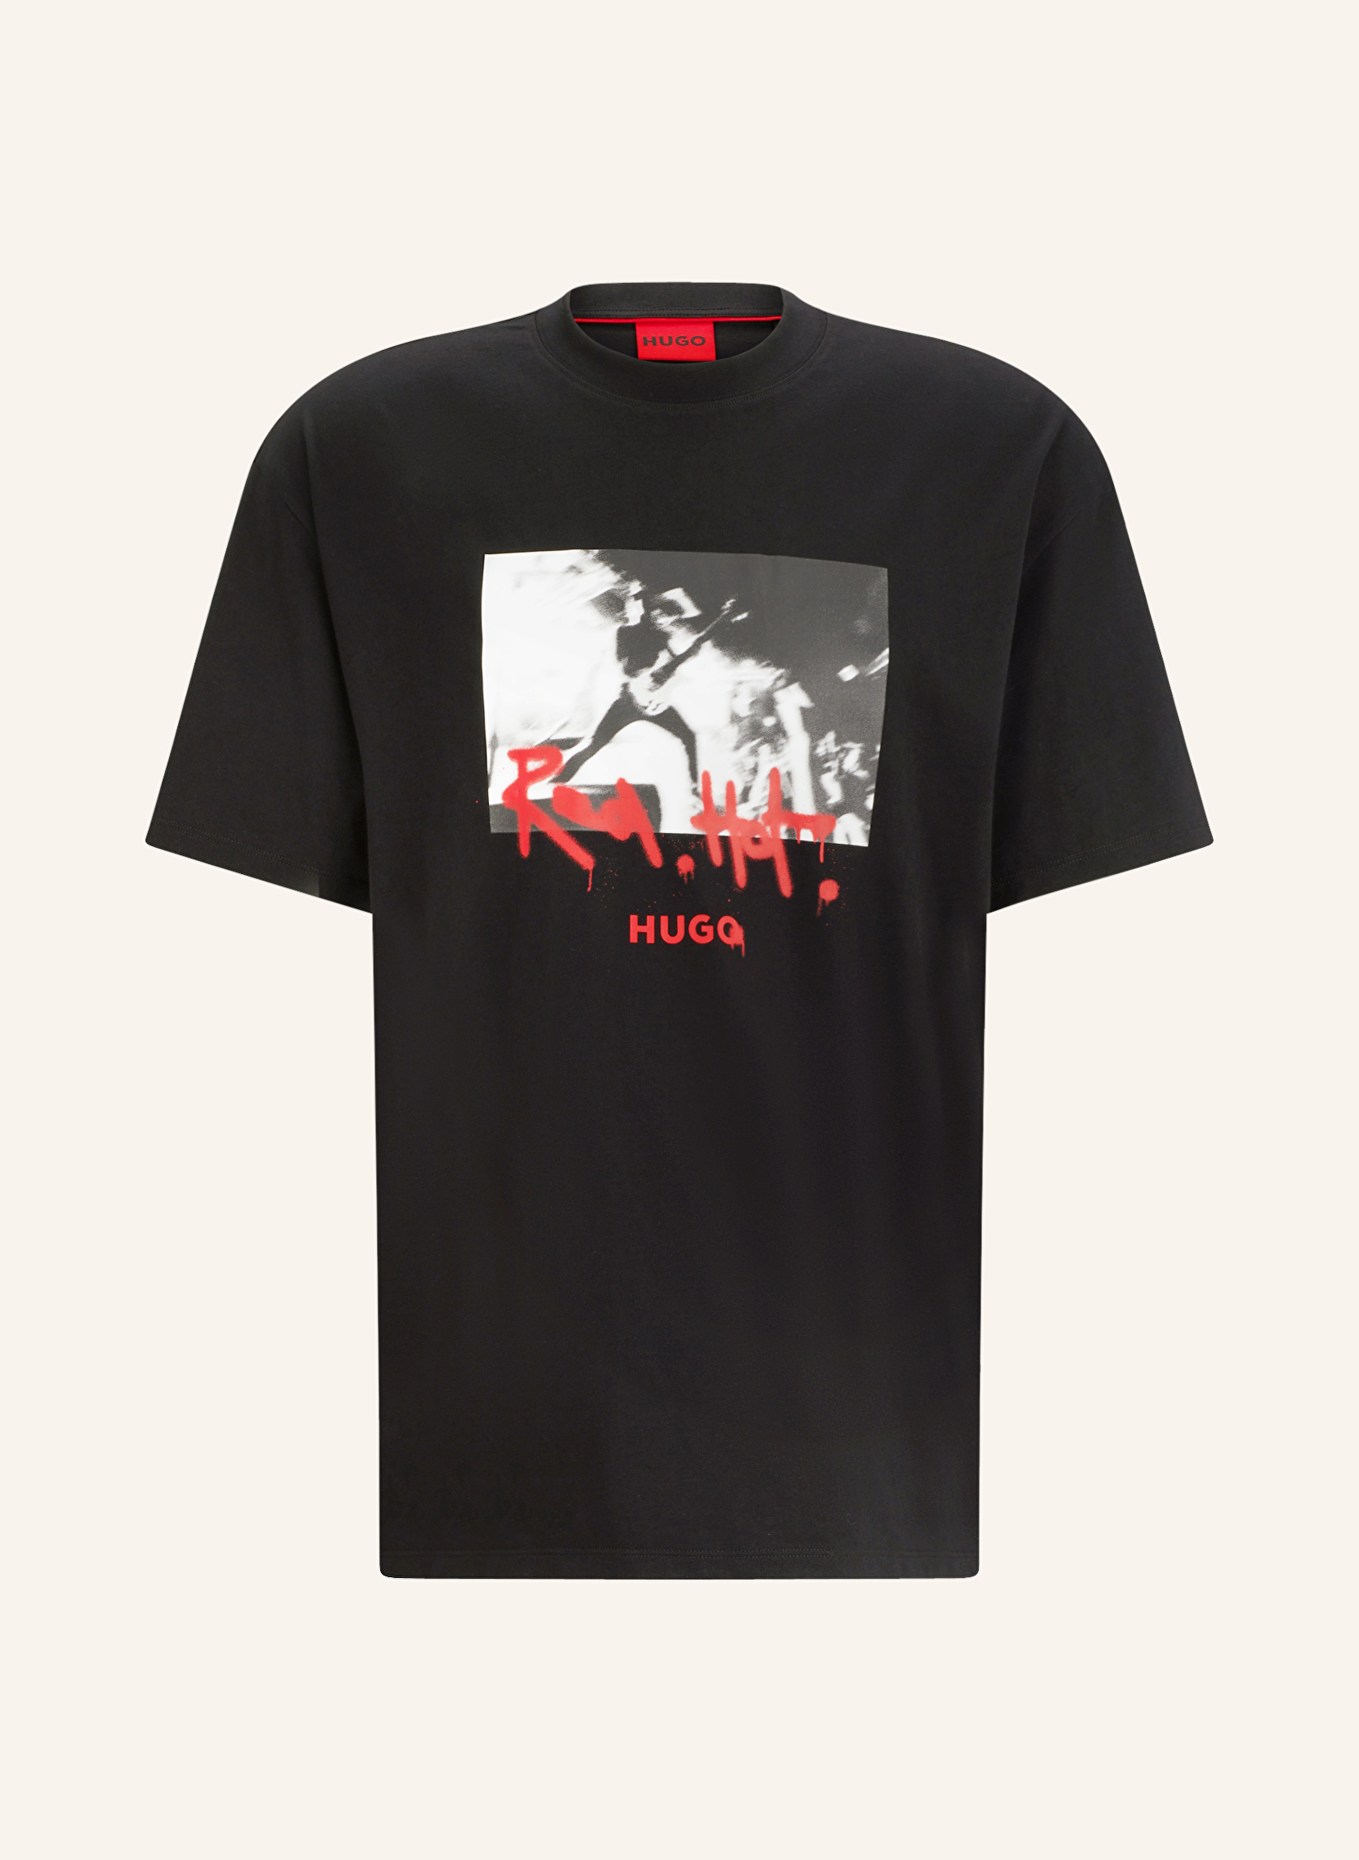 HUGO T-Shirt DOMENADE, Farbe: SCHWARZ/ WEISS/ ROT (Bild 1)